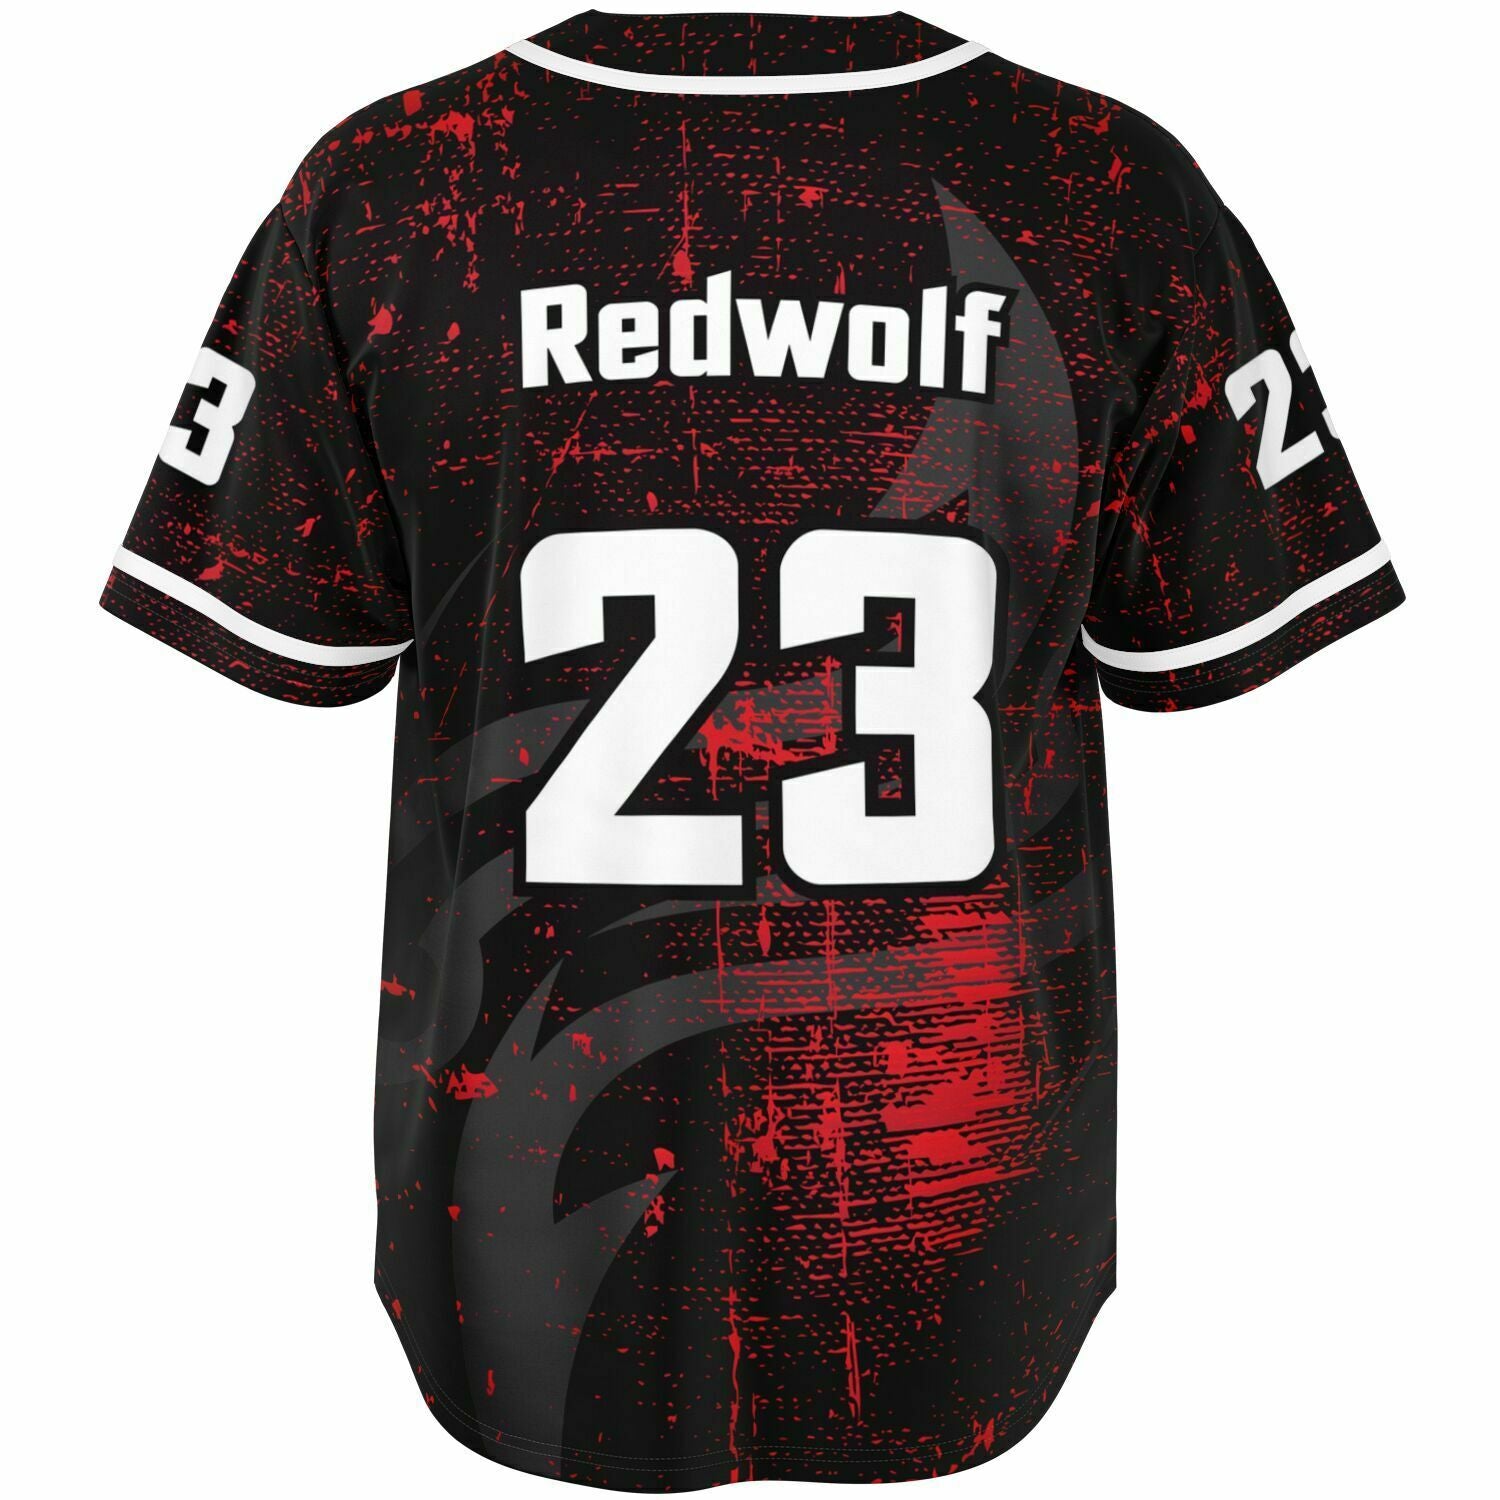 Redwolf Jerseyworks Baseball Jersey - Redwolf Jersey Works